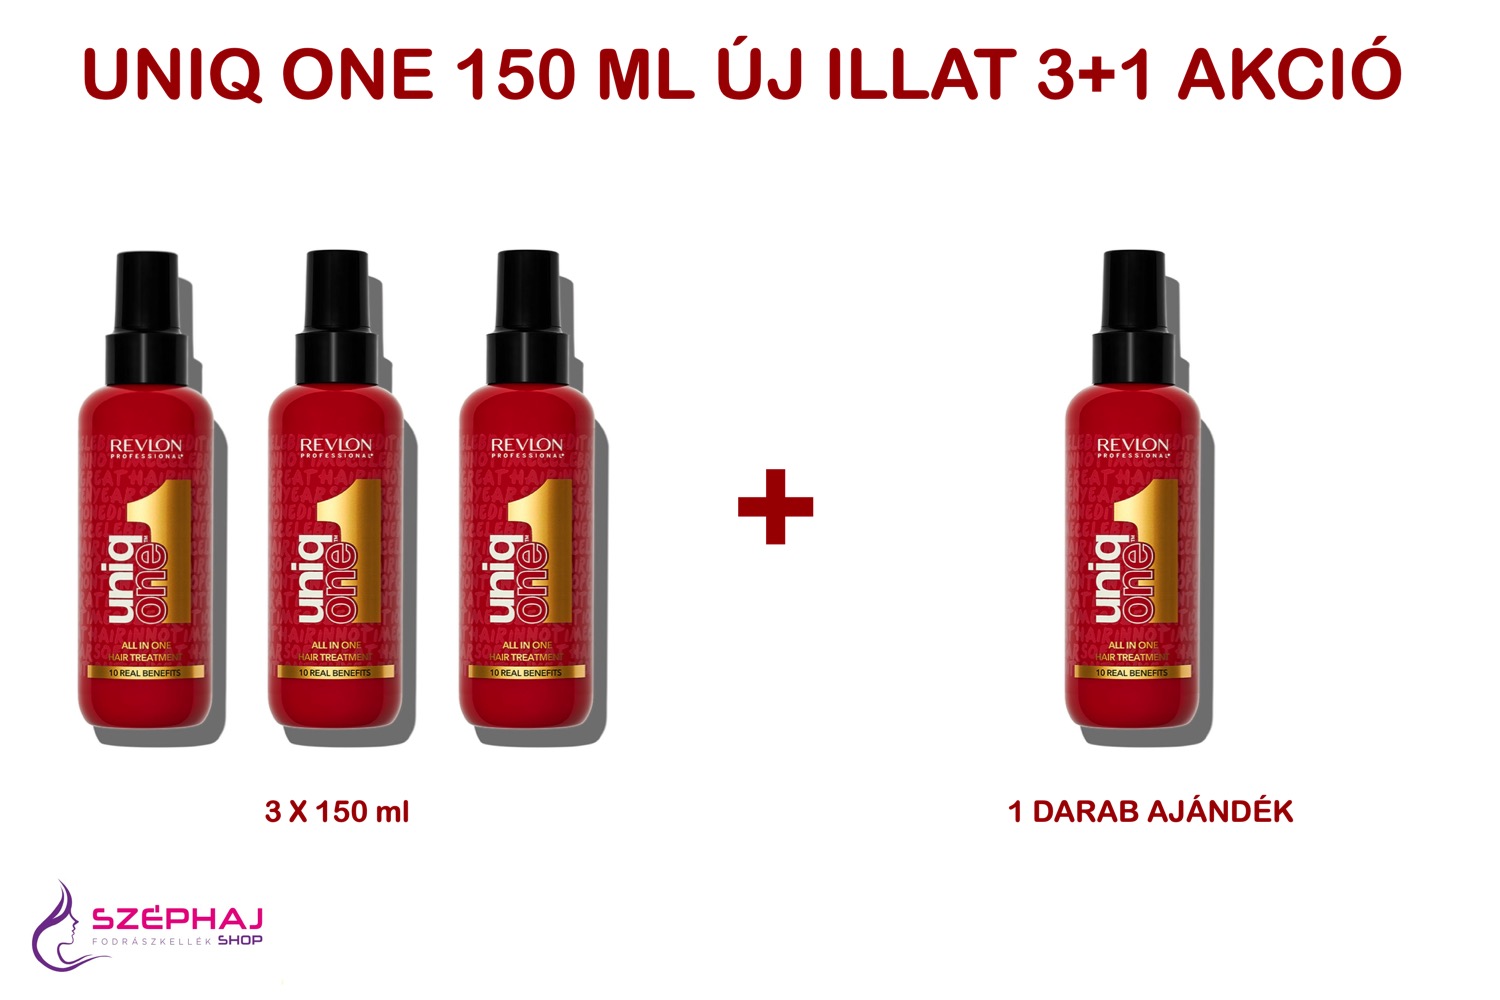 Uniq One 150 ml - All in one hair treatment - NEW FRAGRANCE 3+1 AKCIÓ